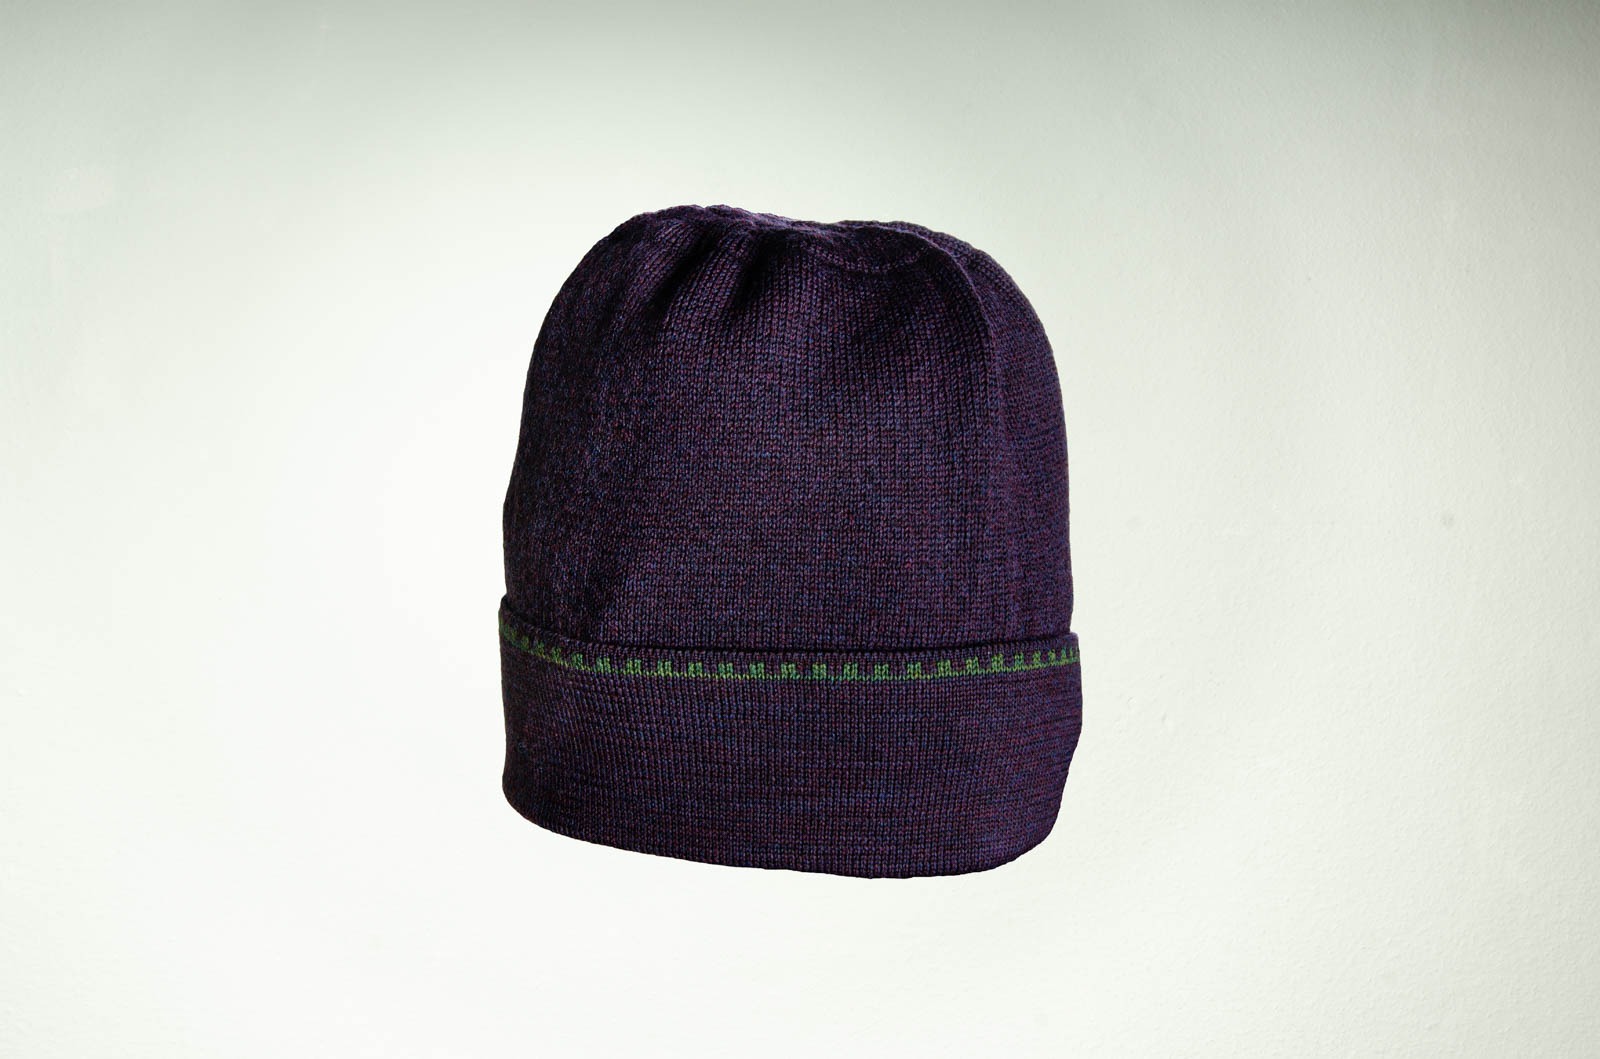 Merino scarf, hat and wrist warmers Ireland in purple and dark green 10